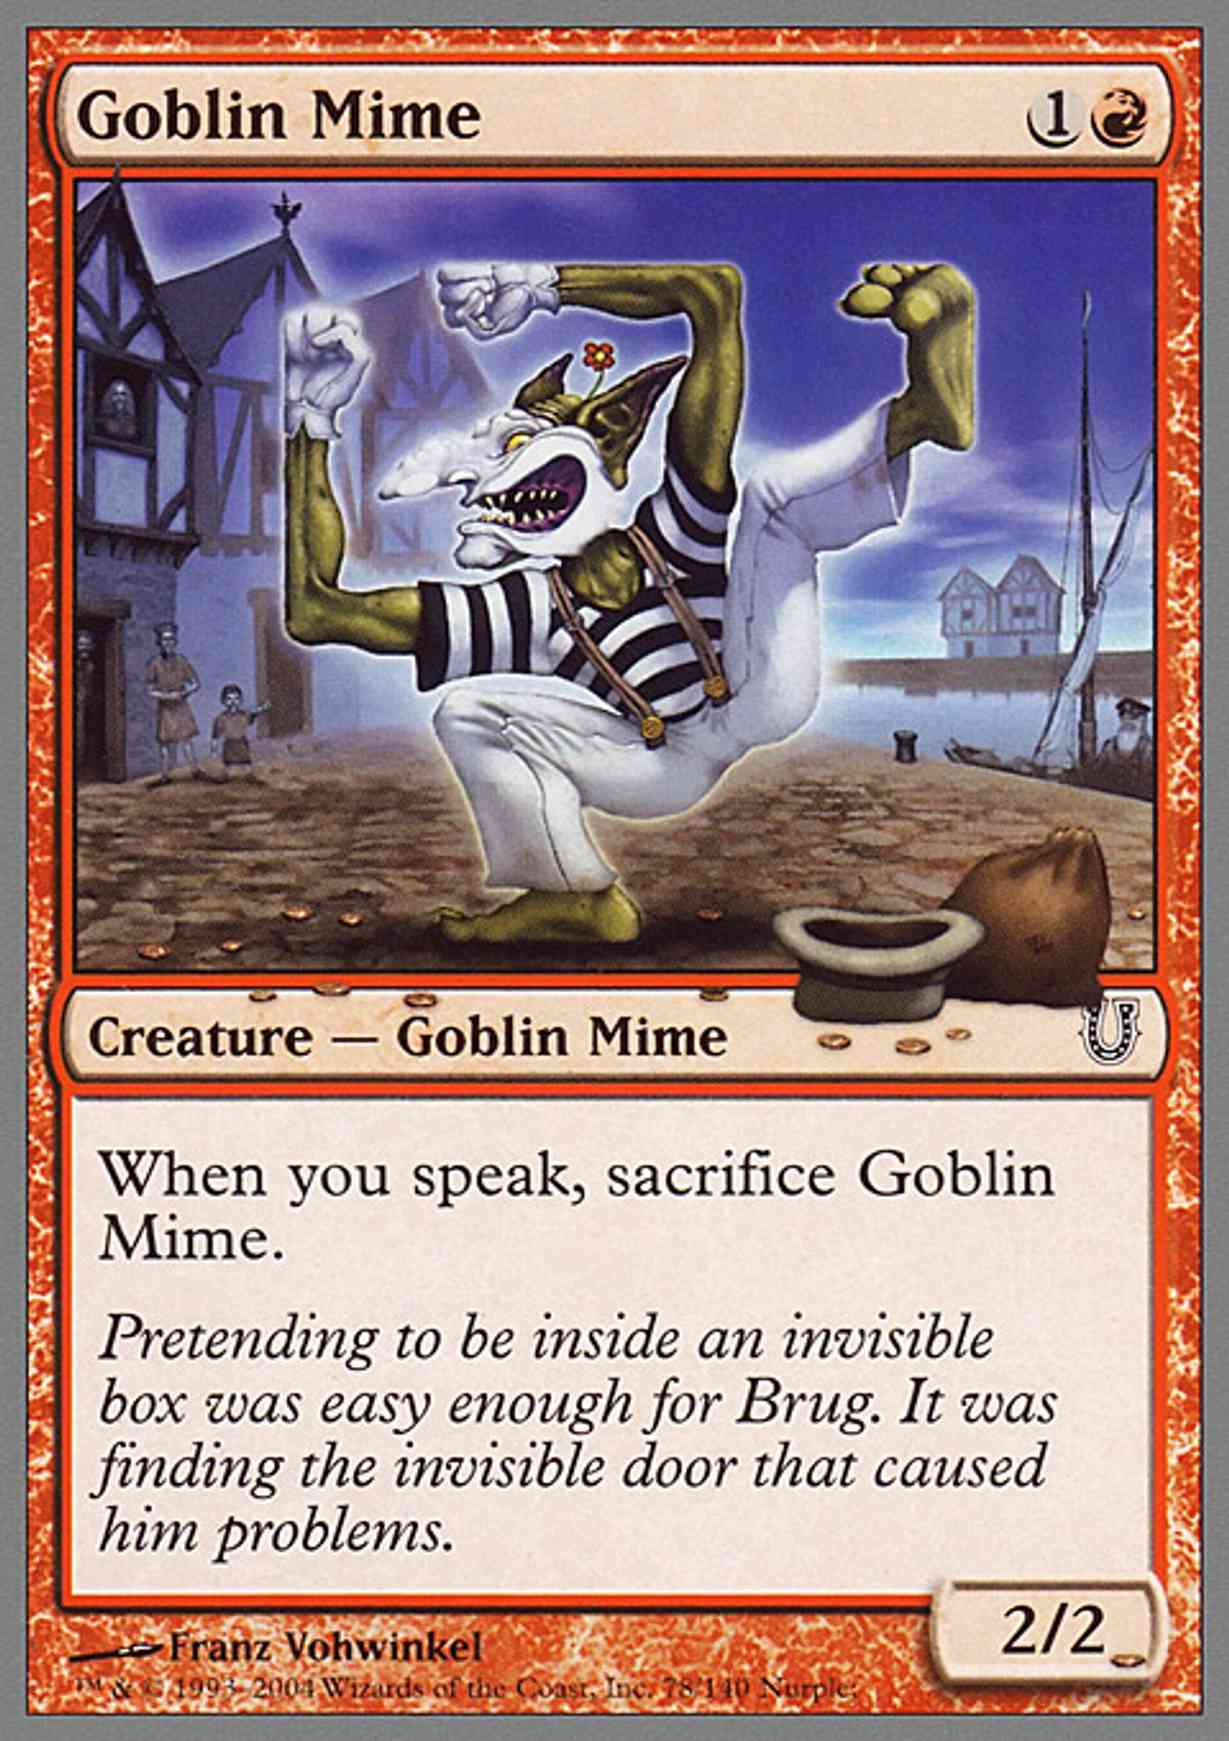 Goblin Mime magic card front